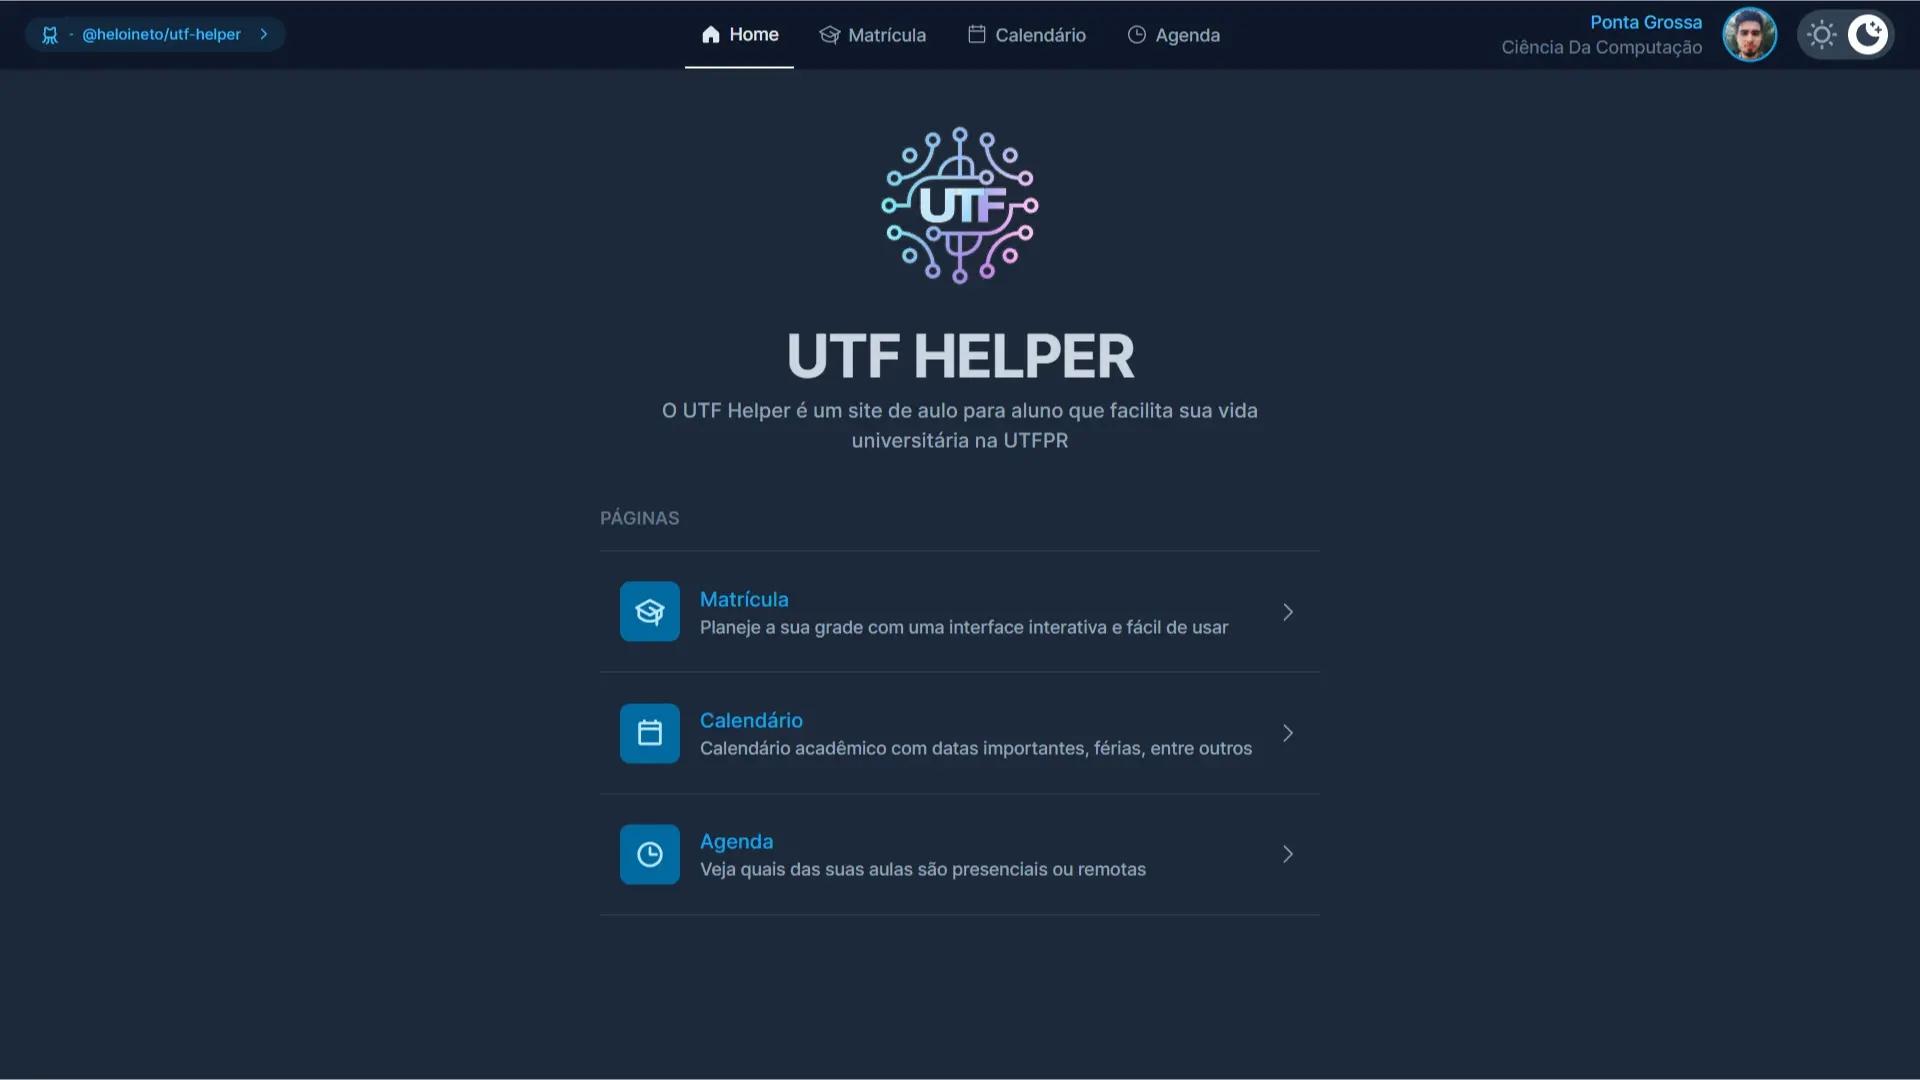 tab [object Object] of the UTF Helper project